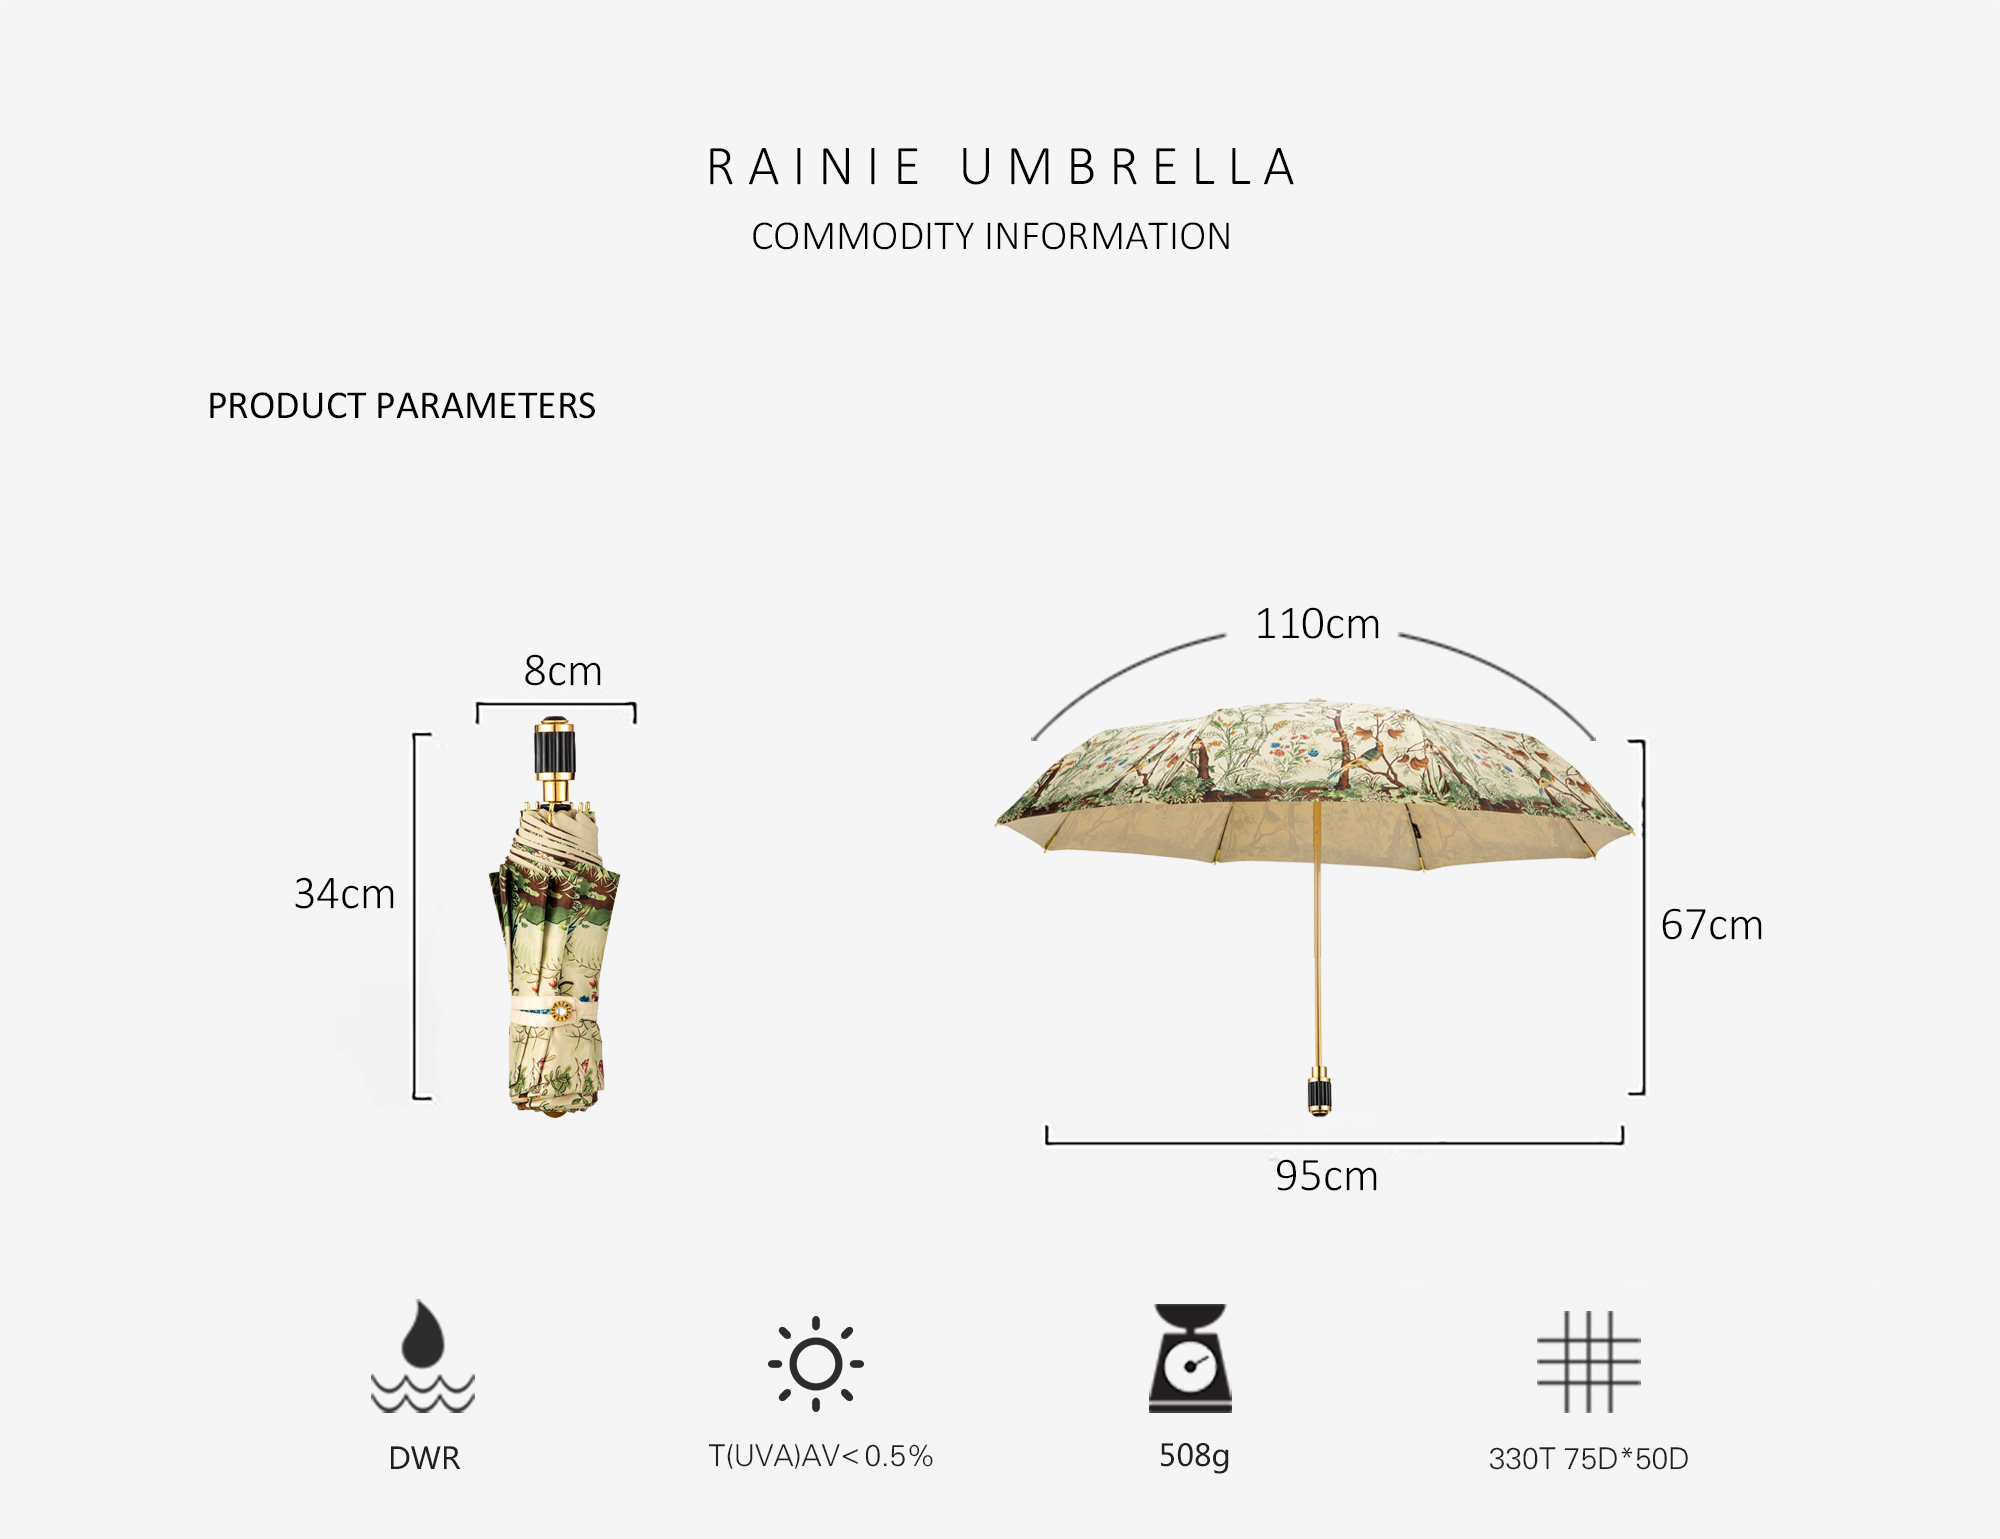 The lantern folds the umbrella